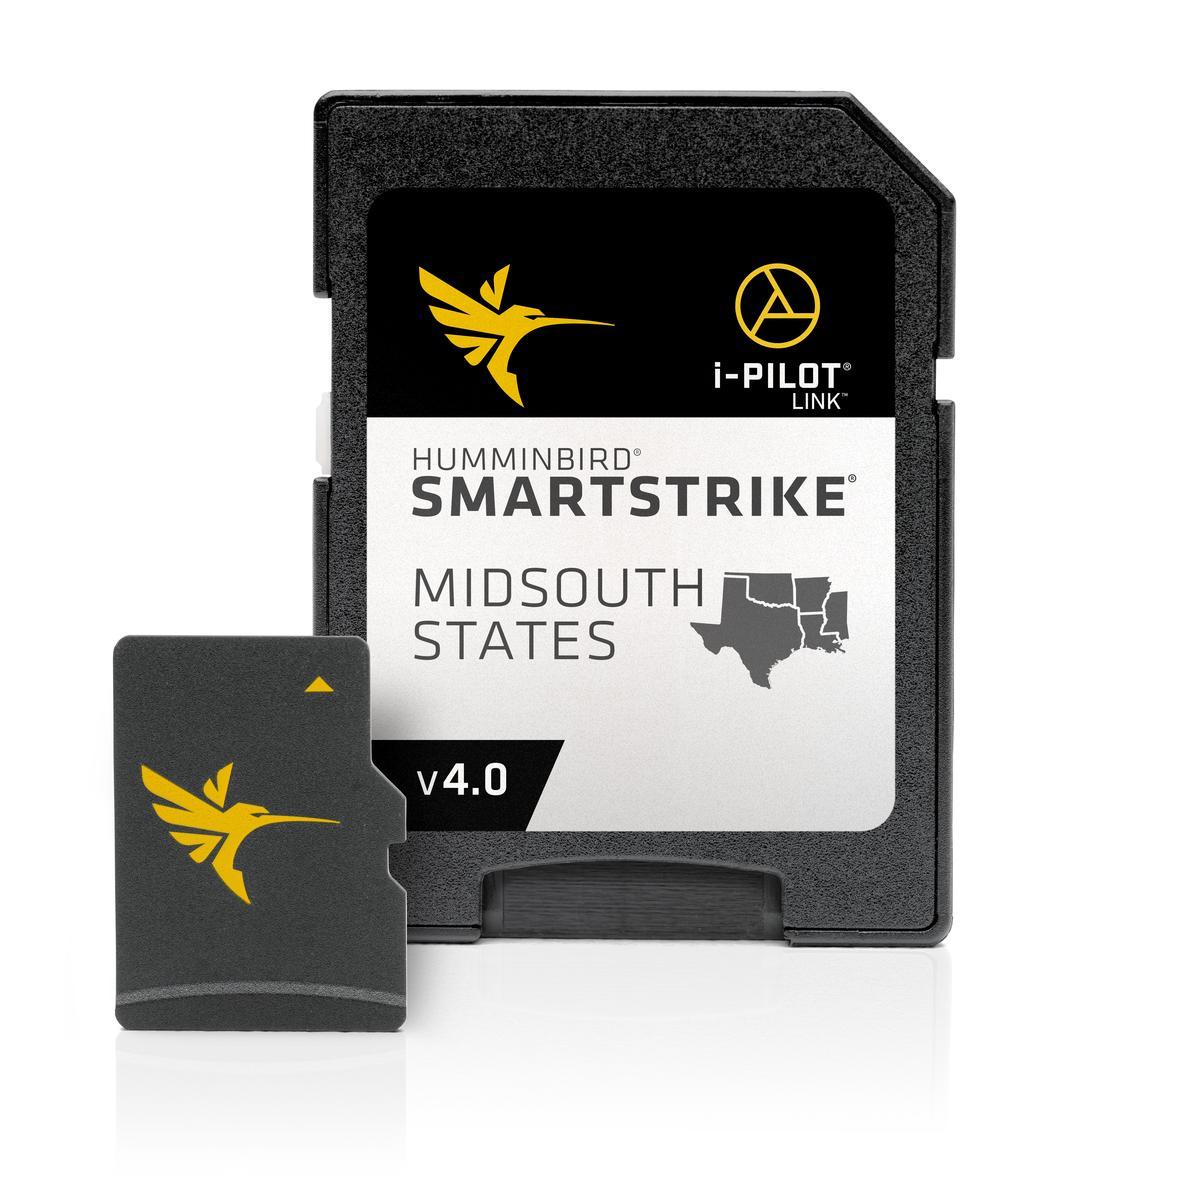 Humminbird Smartstrike Midsouth States V4